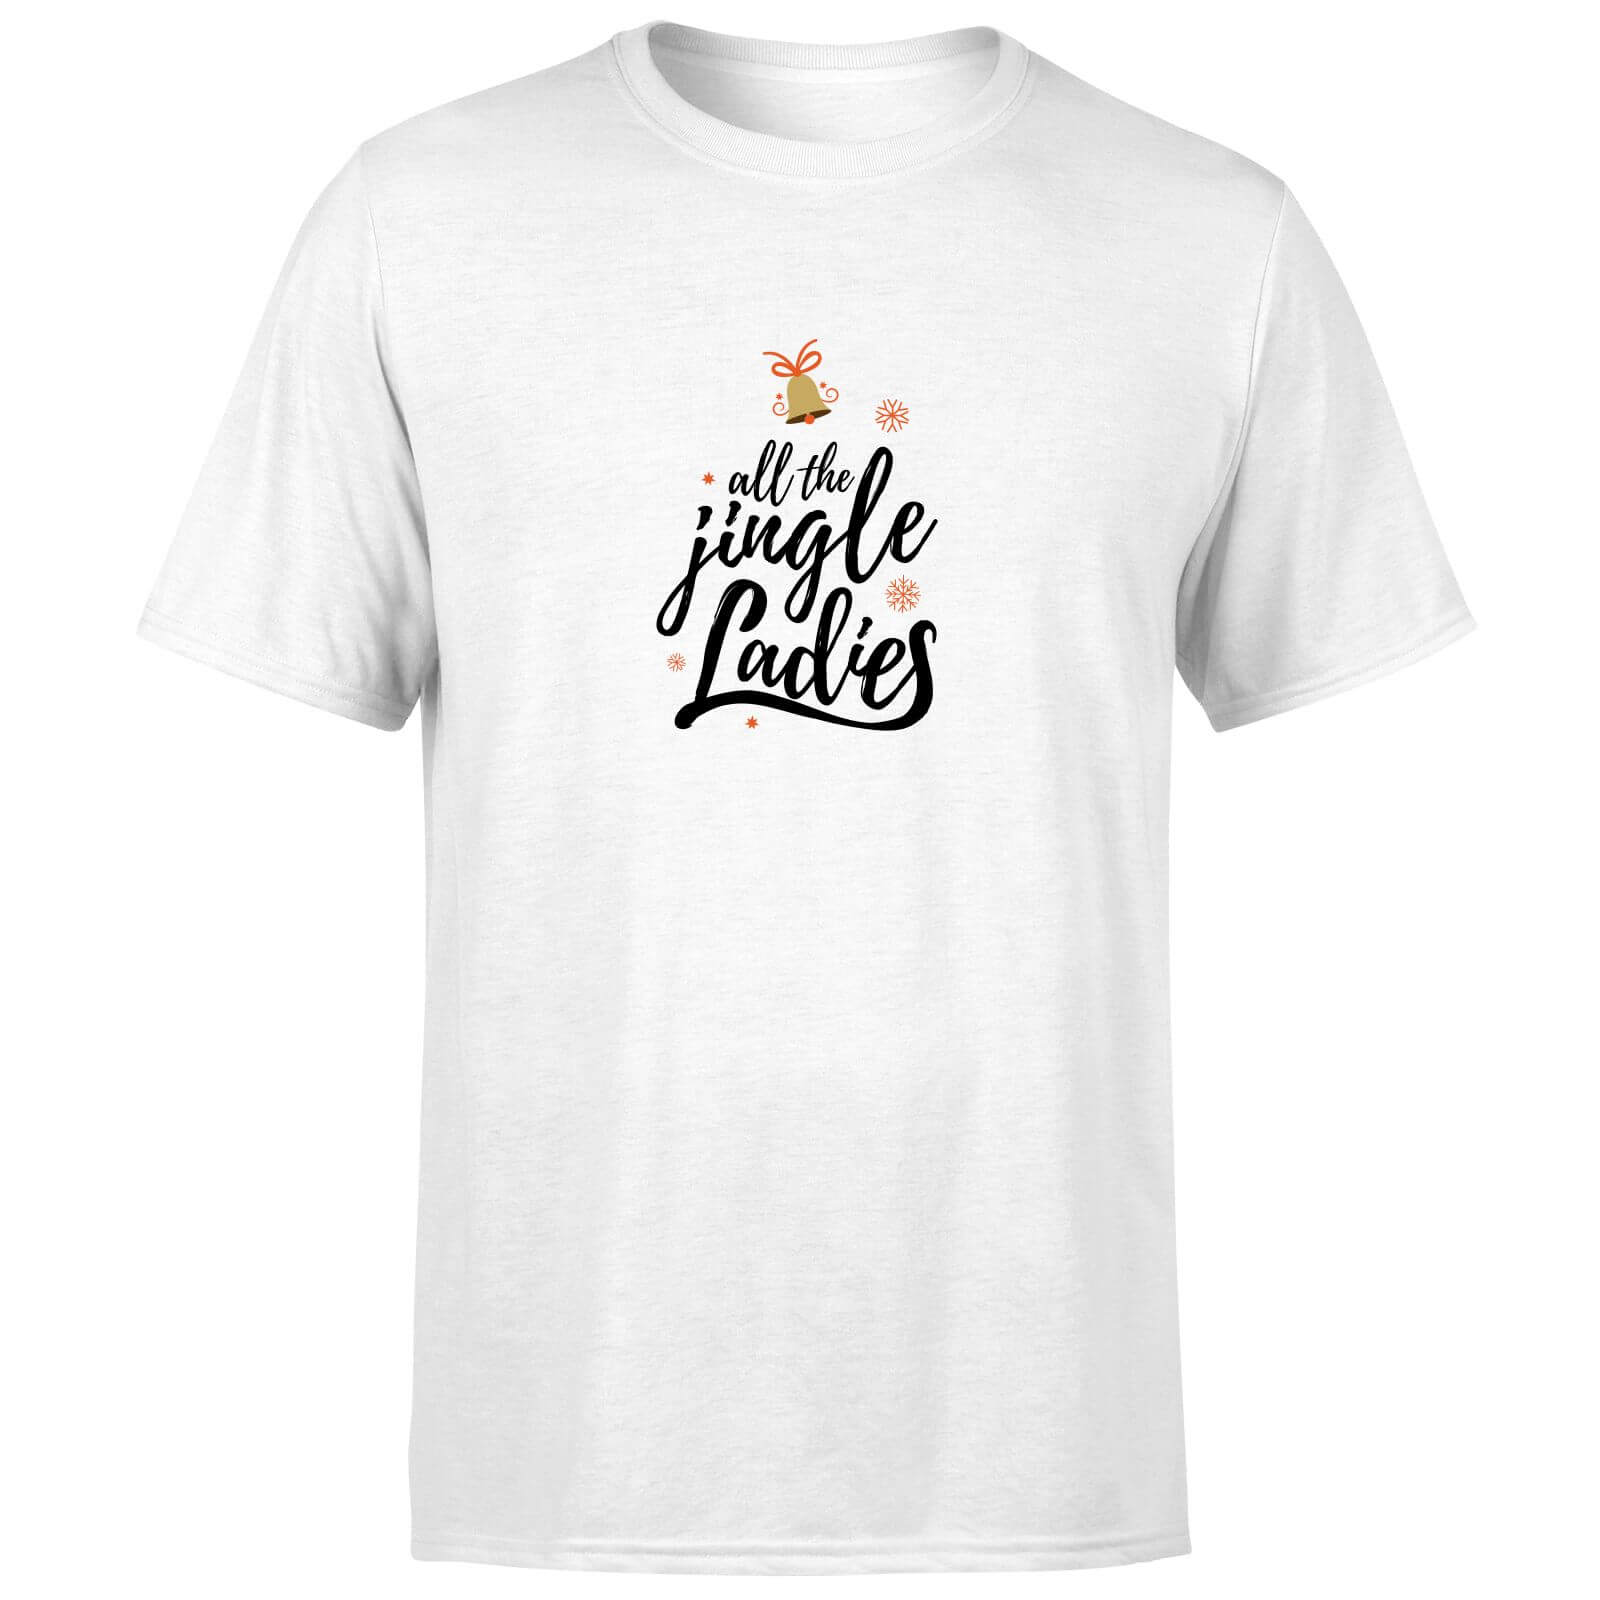 All The Jingle Ladies T-Shirt - White - S - White